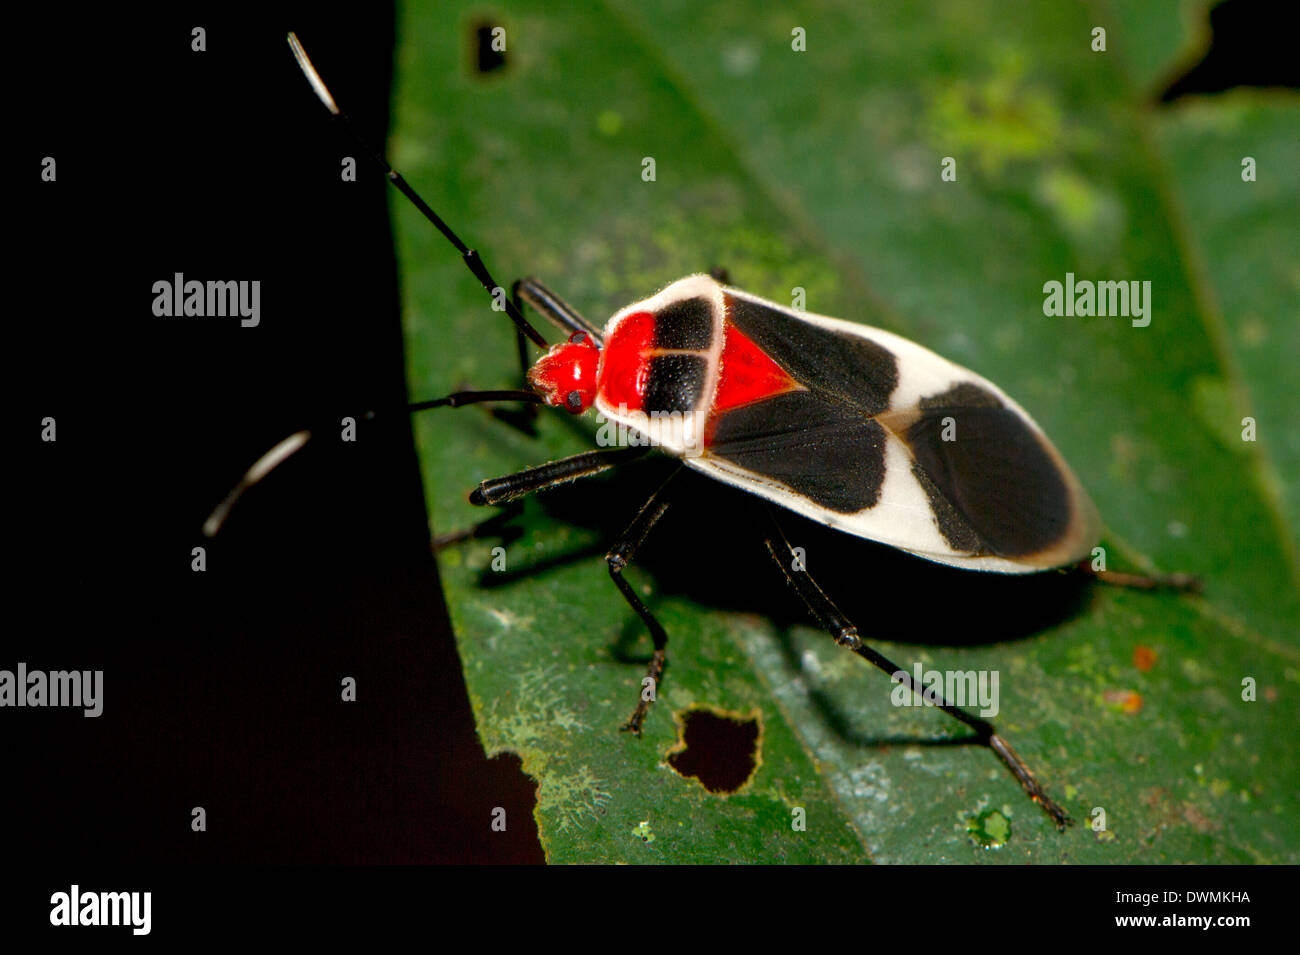 Hemipteran, known as the True bugs, family Lygaeidae, Maliau Basin, Sabah, Borneo, Malaysia, Southeast Asia Stock Photo